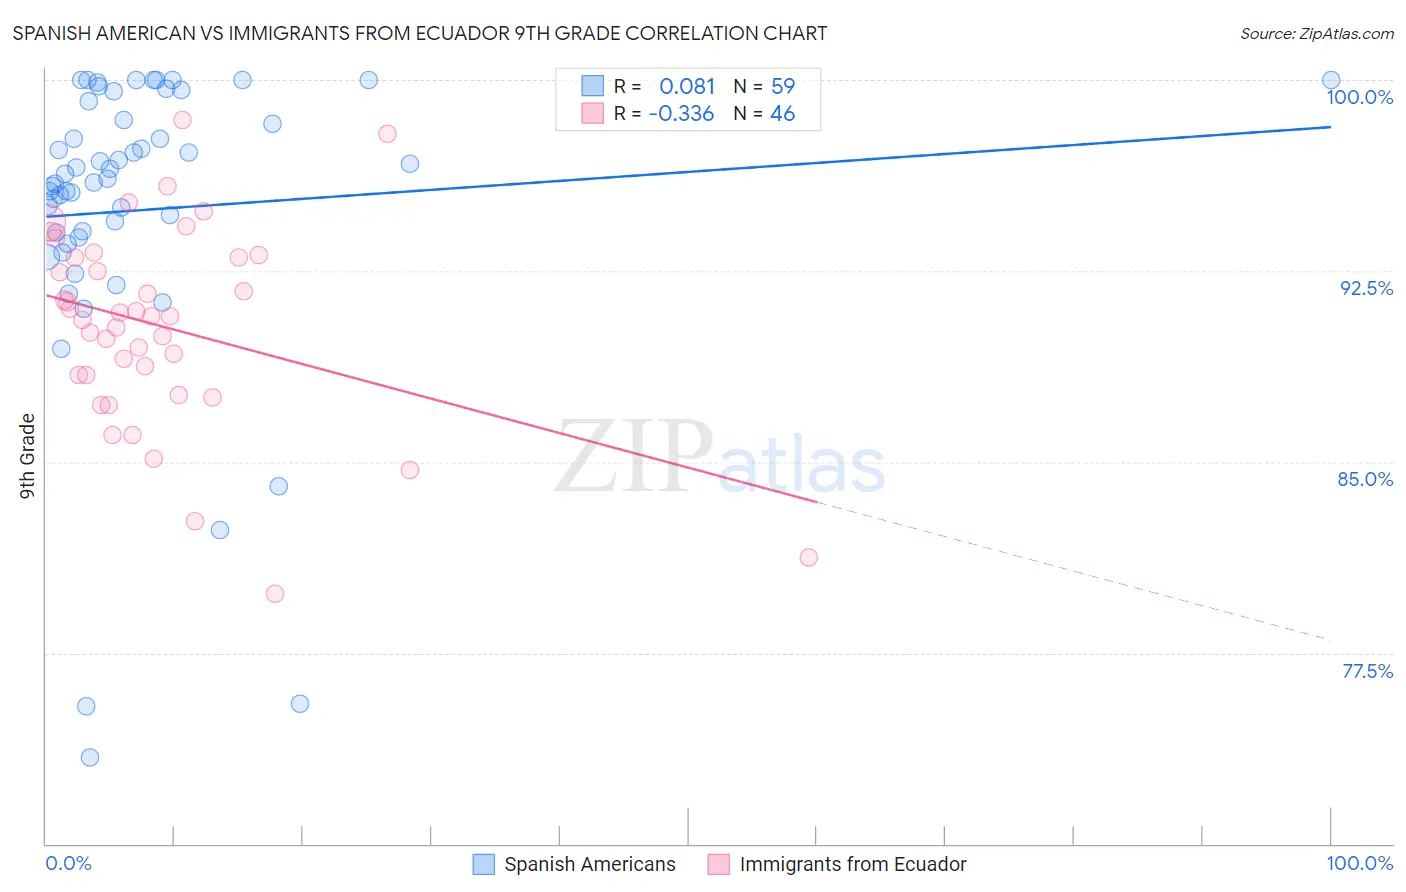 Spanish American vs Immigrants from Ecuador 9th Grade